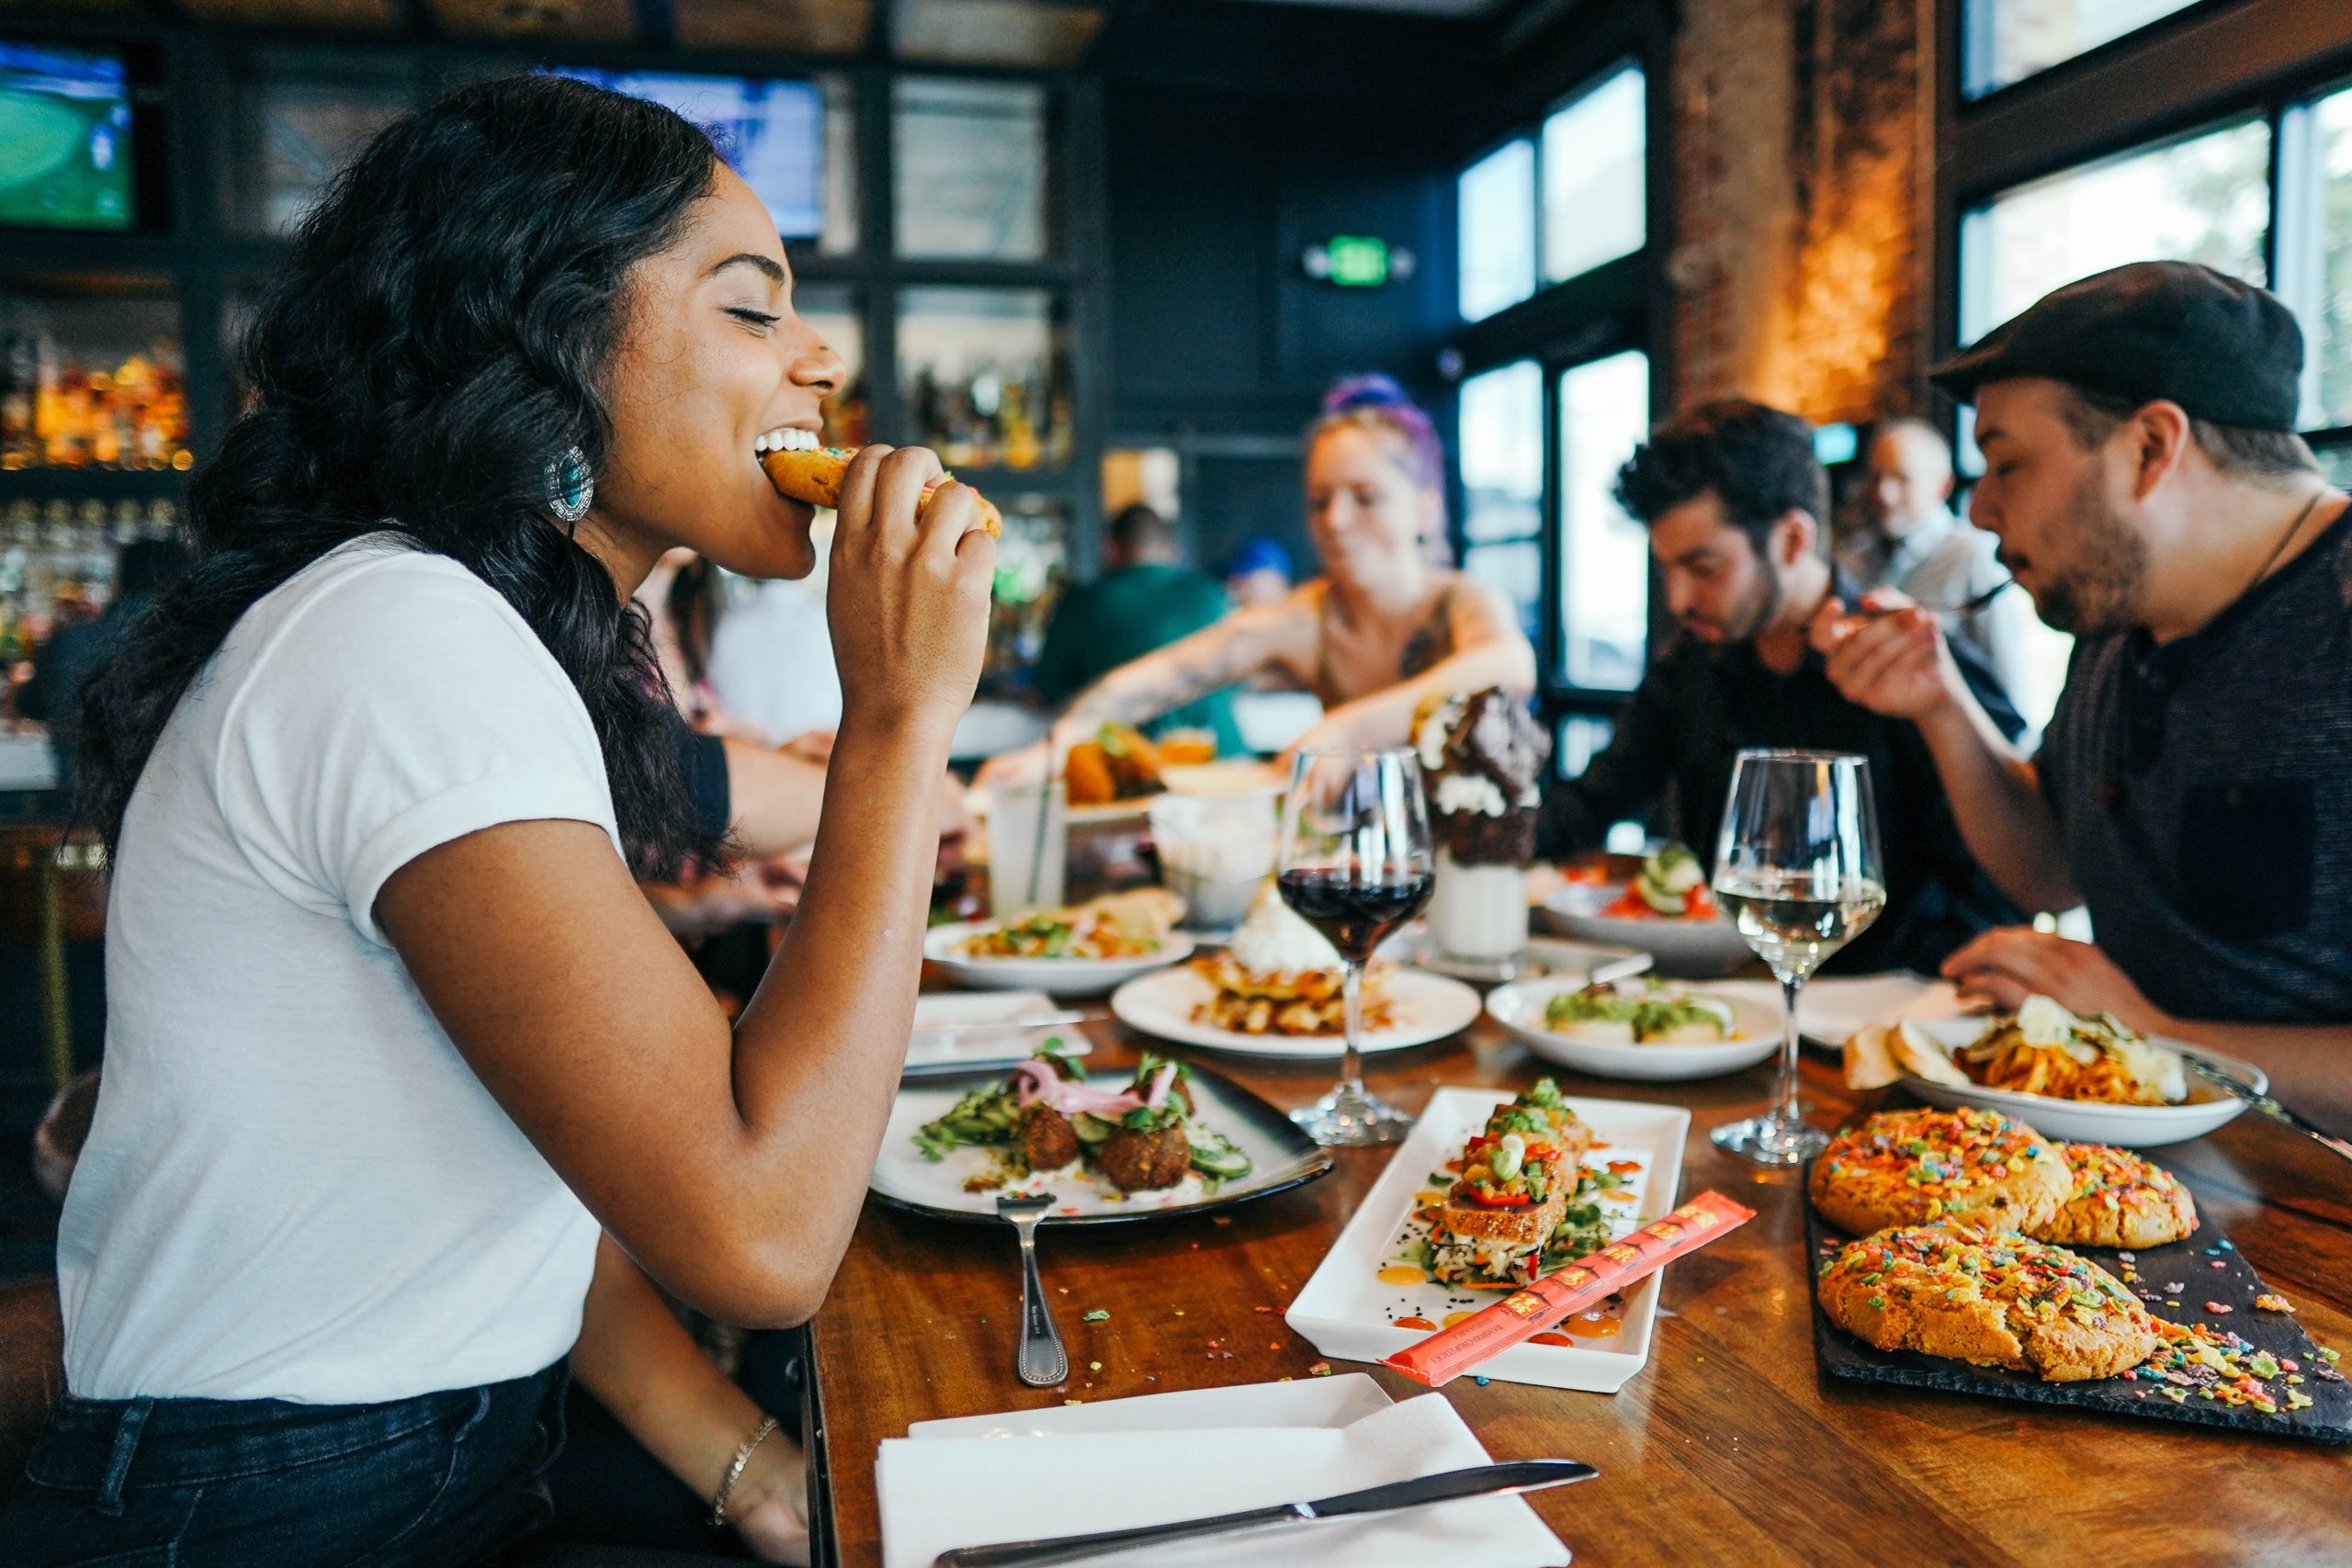 Woman eating food at a table at a restaurant